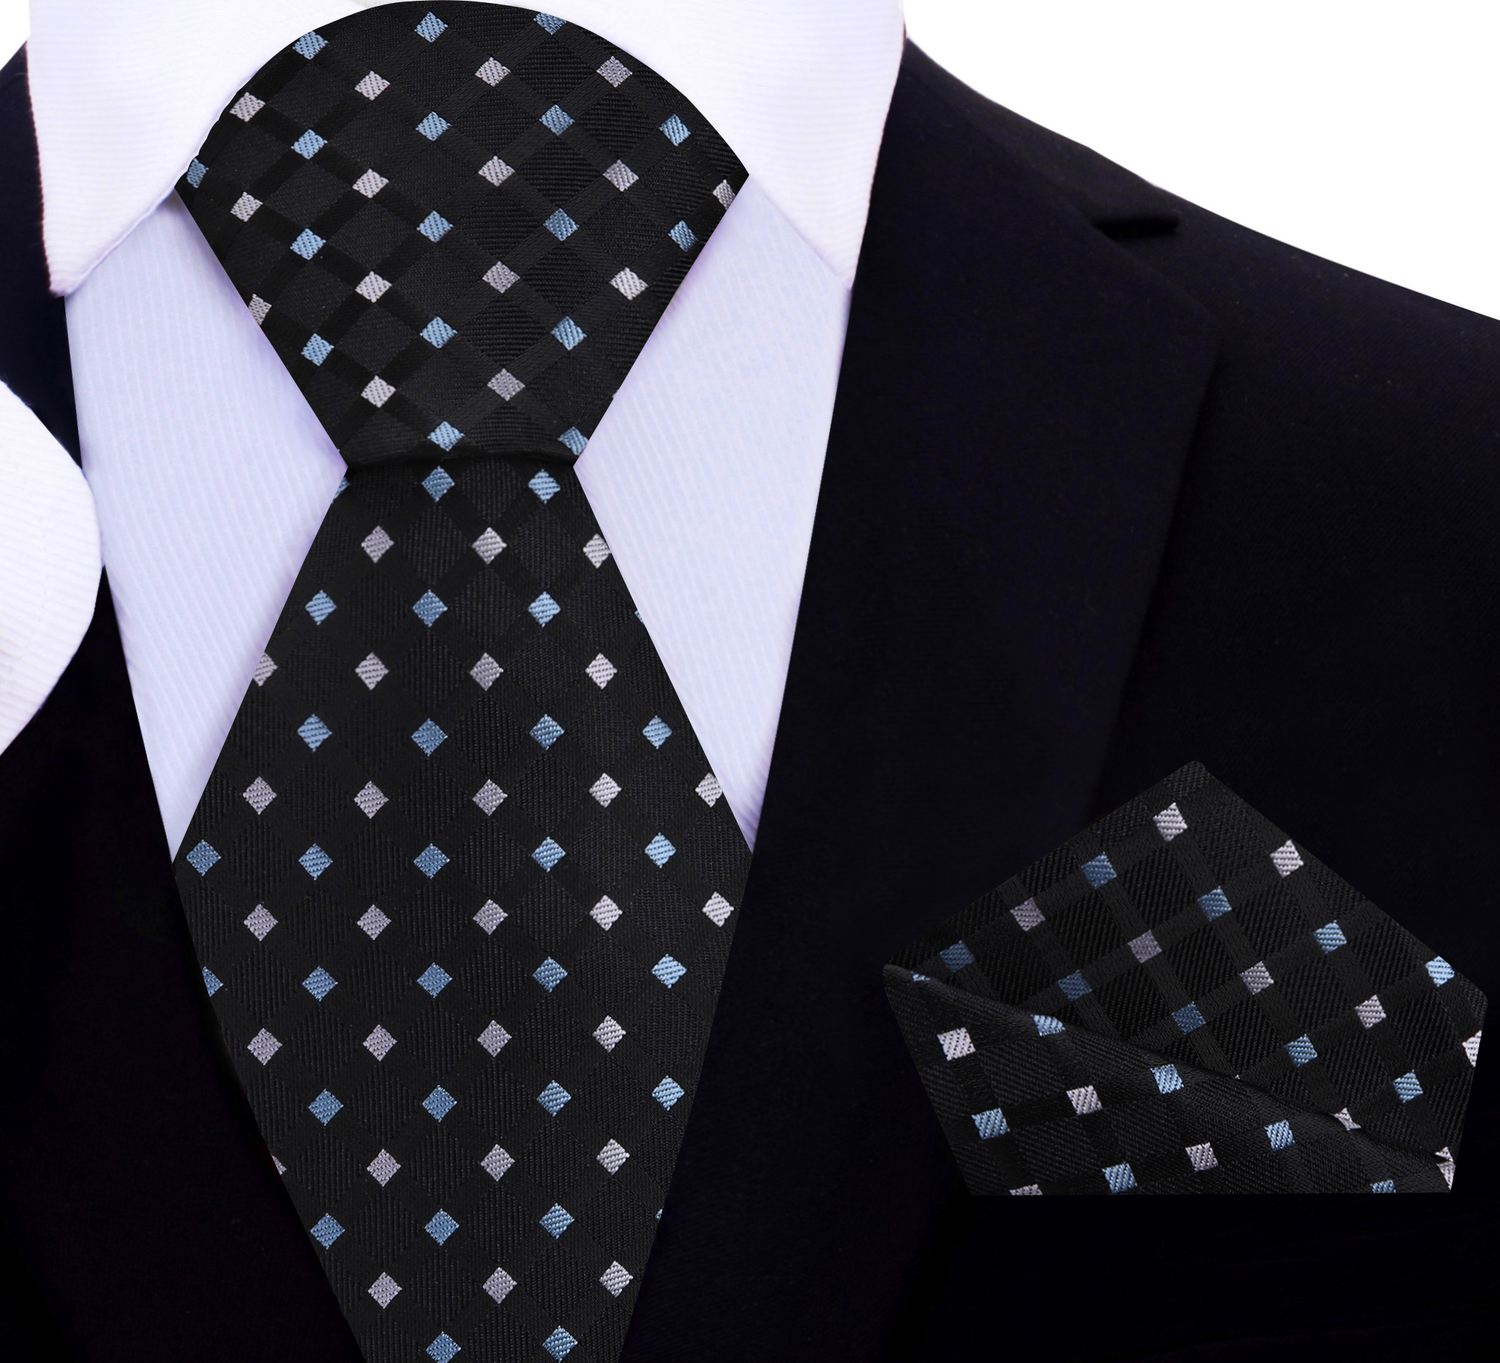 A Black, Light Blue, Light Grey Color Geometric Diamond Pattern Silk Tie, Pocket Square